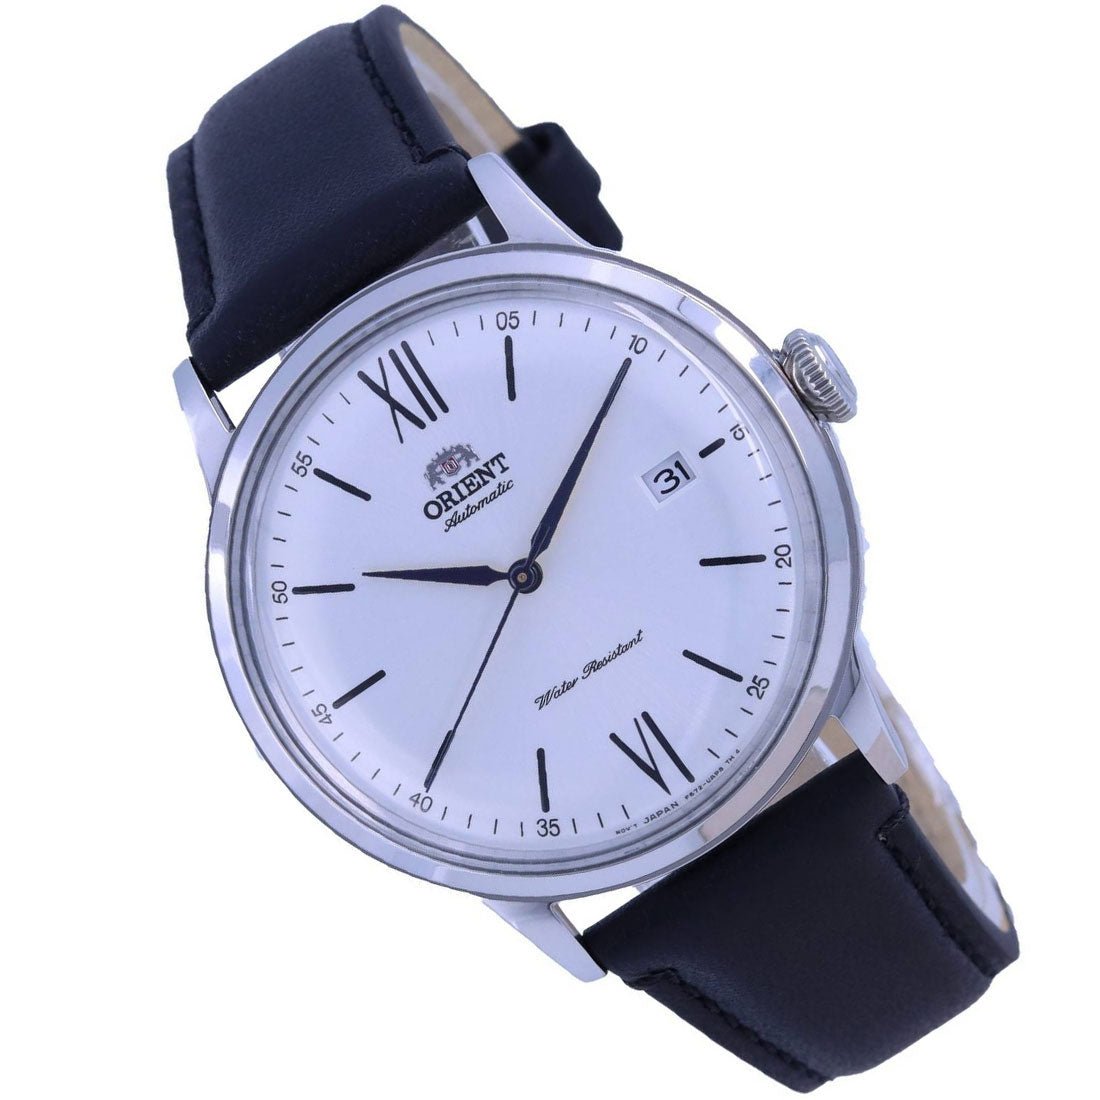 Orient Contemporary Bambino RA-AC0022S RA-AC0022S10B Leather Watch -Orient